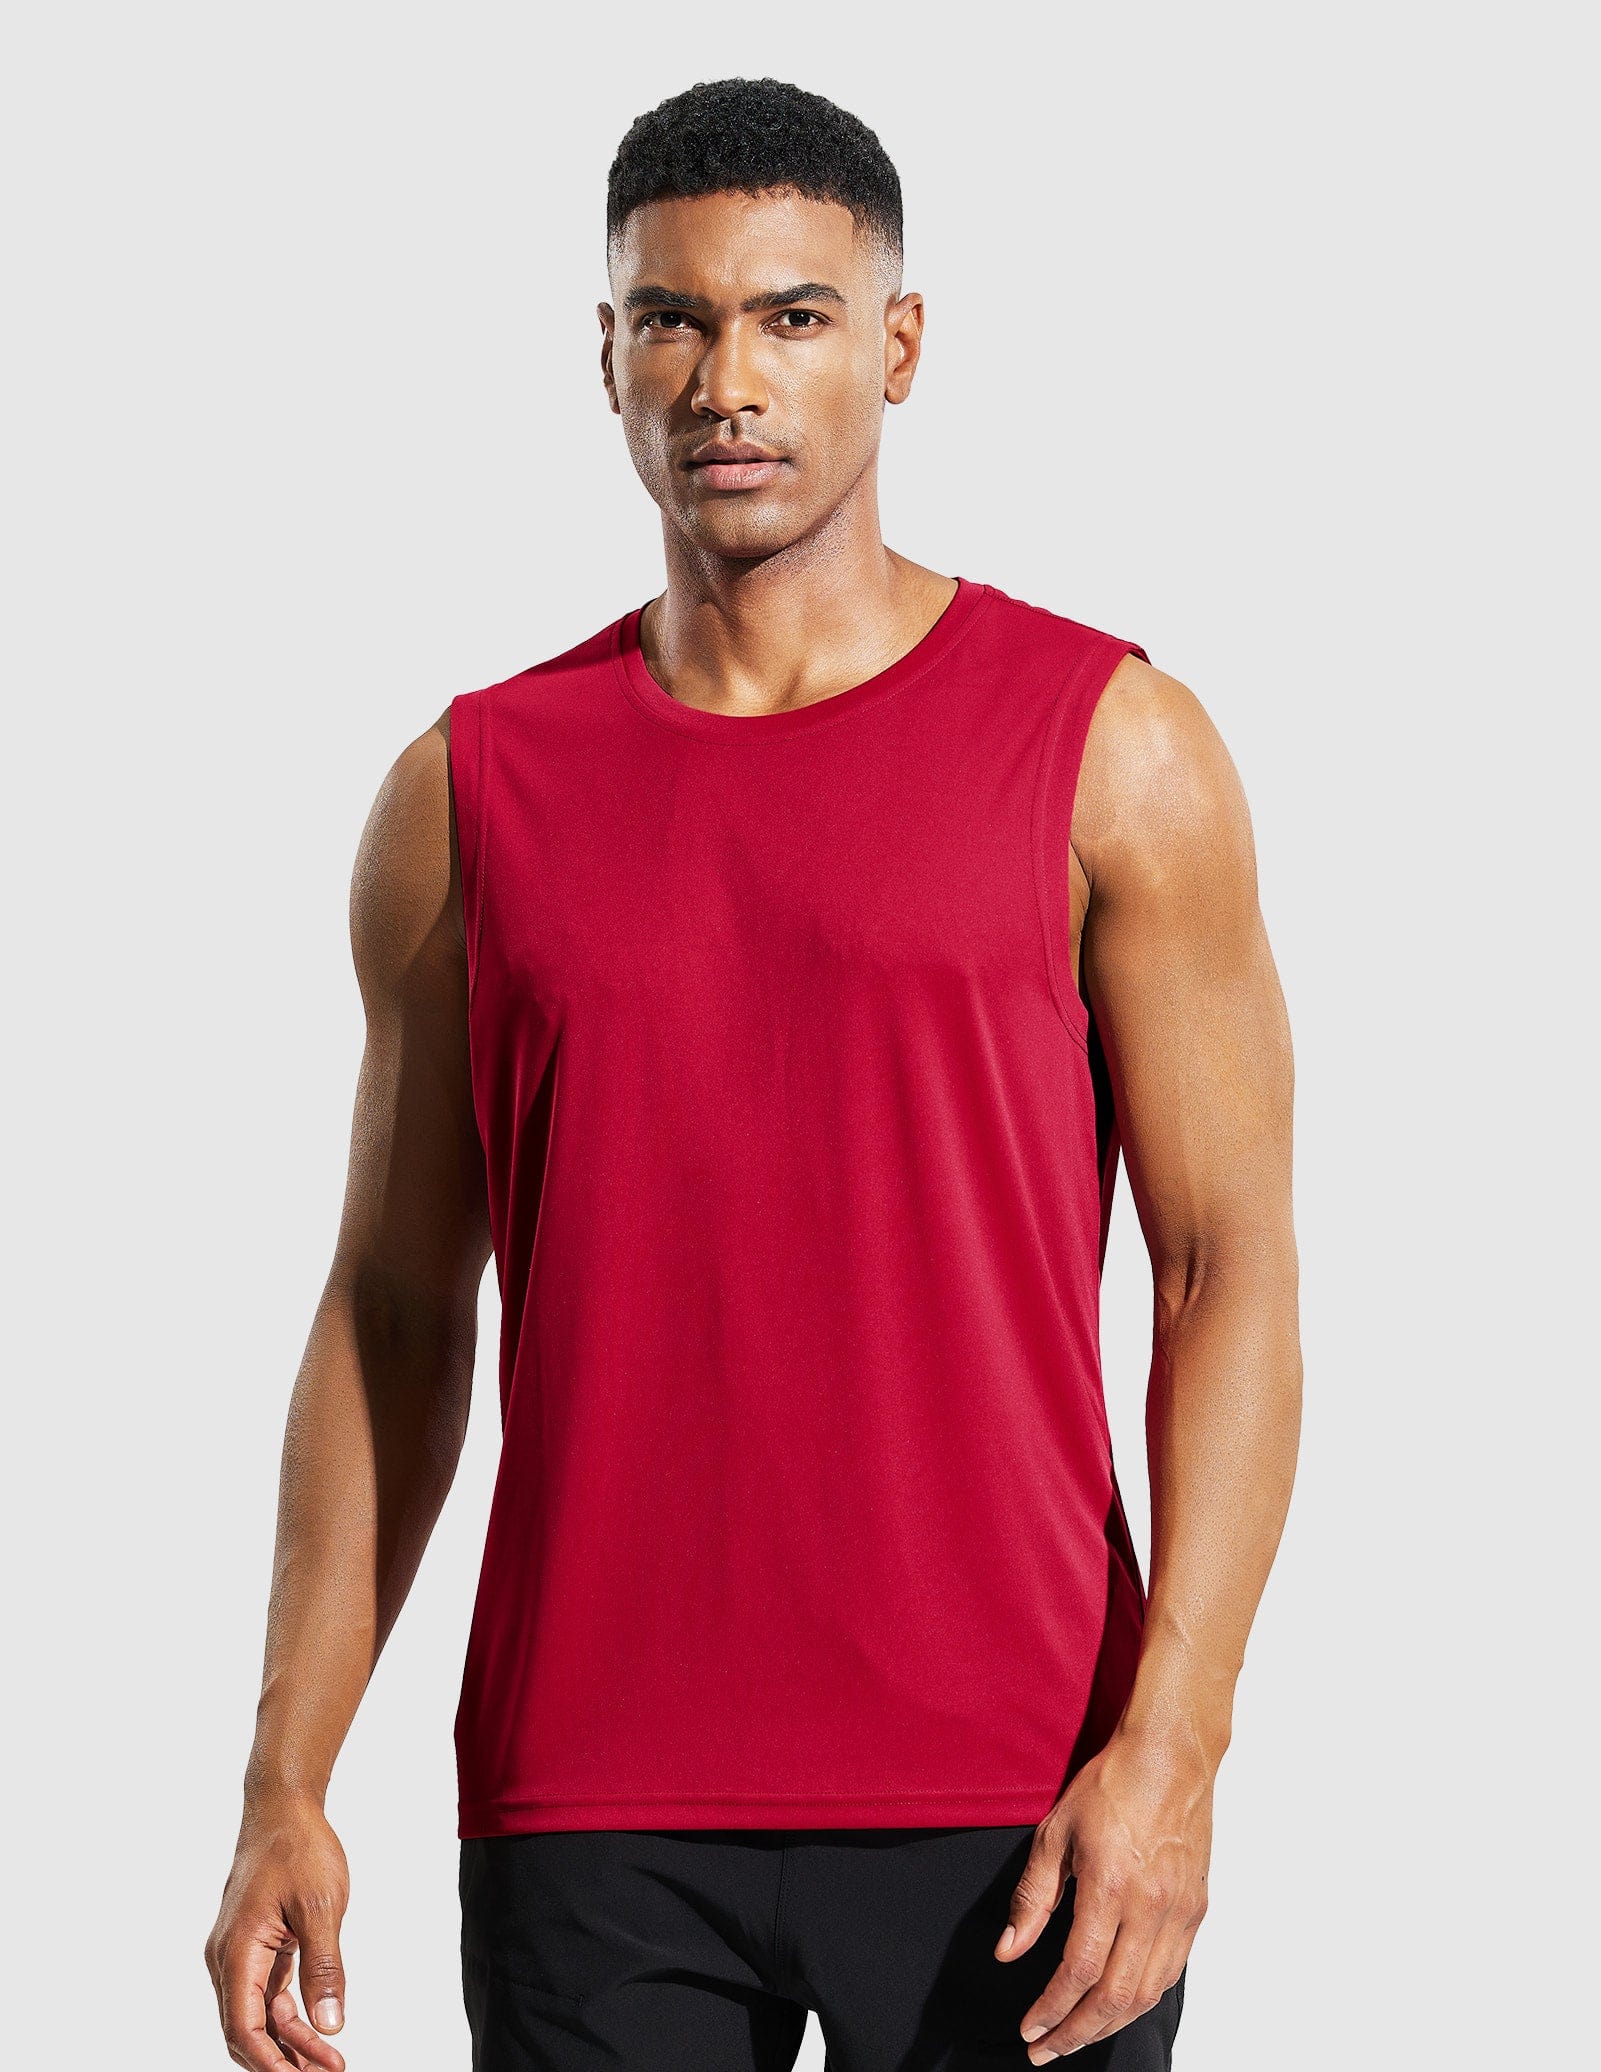 Mier Men's Sleeveless Lightweight UPF 50+ Sun Shirts Quick Dry Tank Tops, Red / L